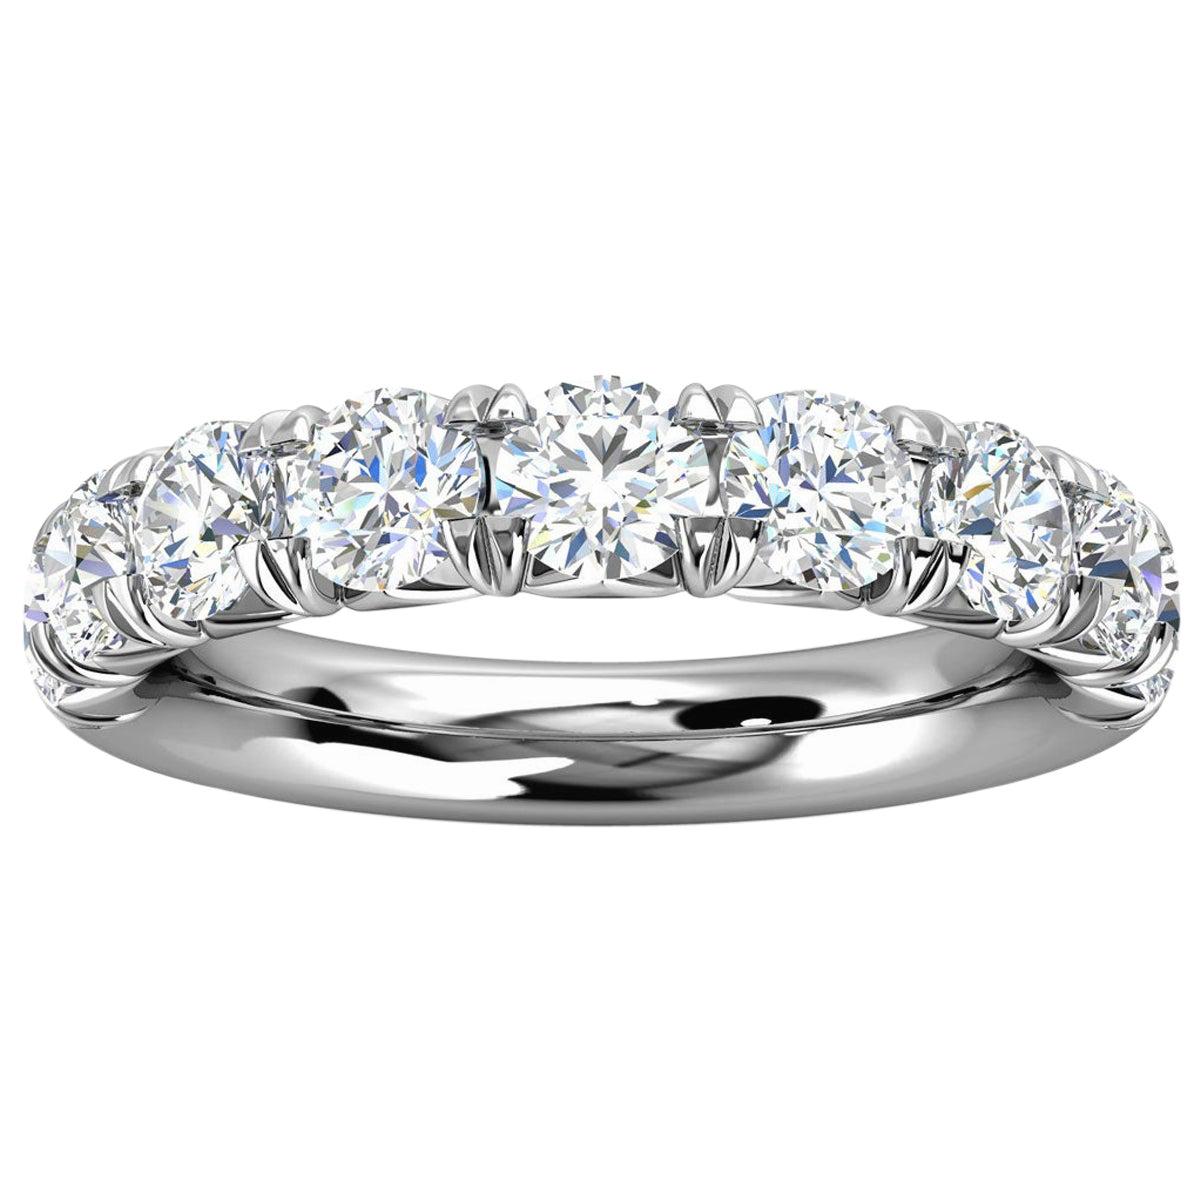 Platinum Voyage French Pave Diamond Ring '1 1/2 Ct. Tw'